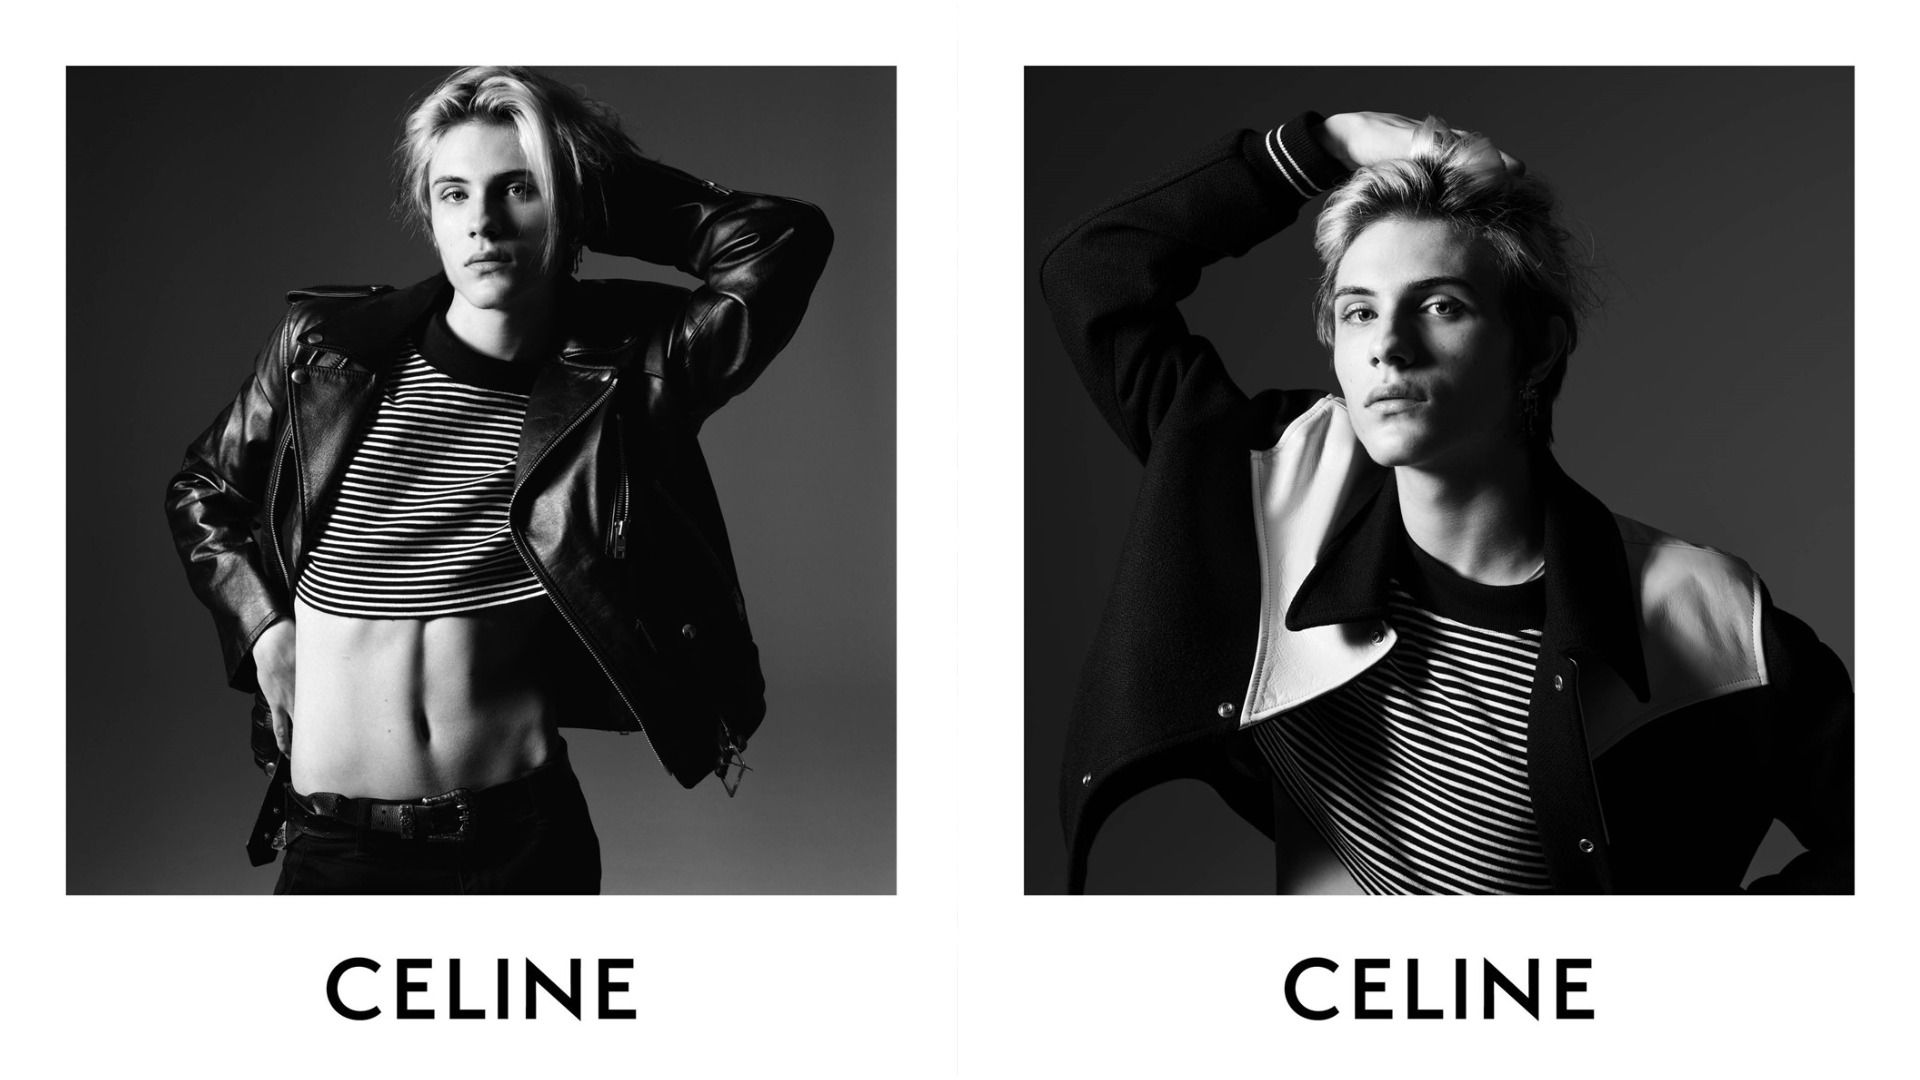 Celine enlists TikTok star Noen Eubanks in its latest fashion campaign